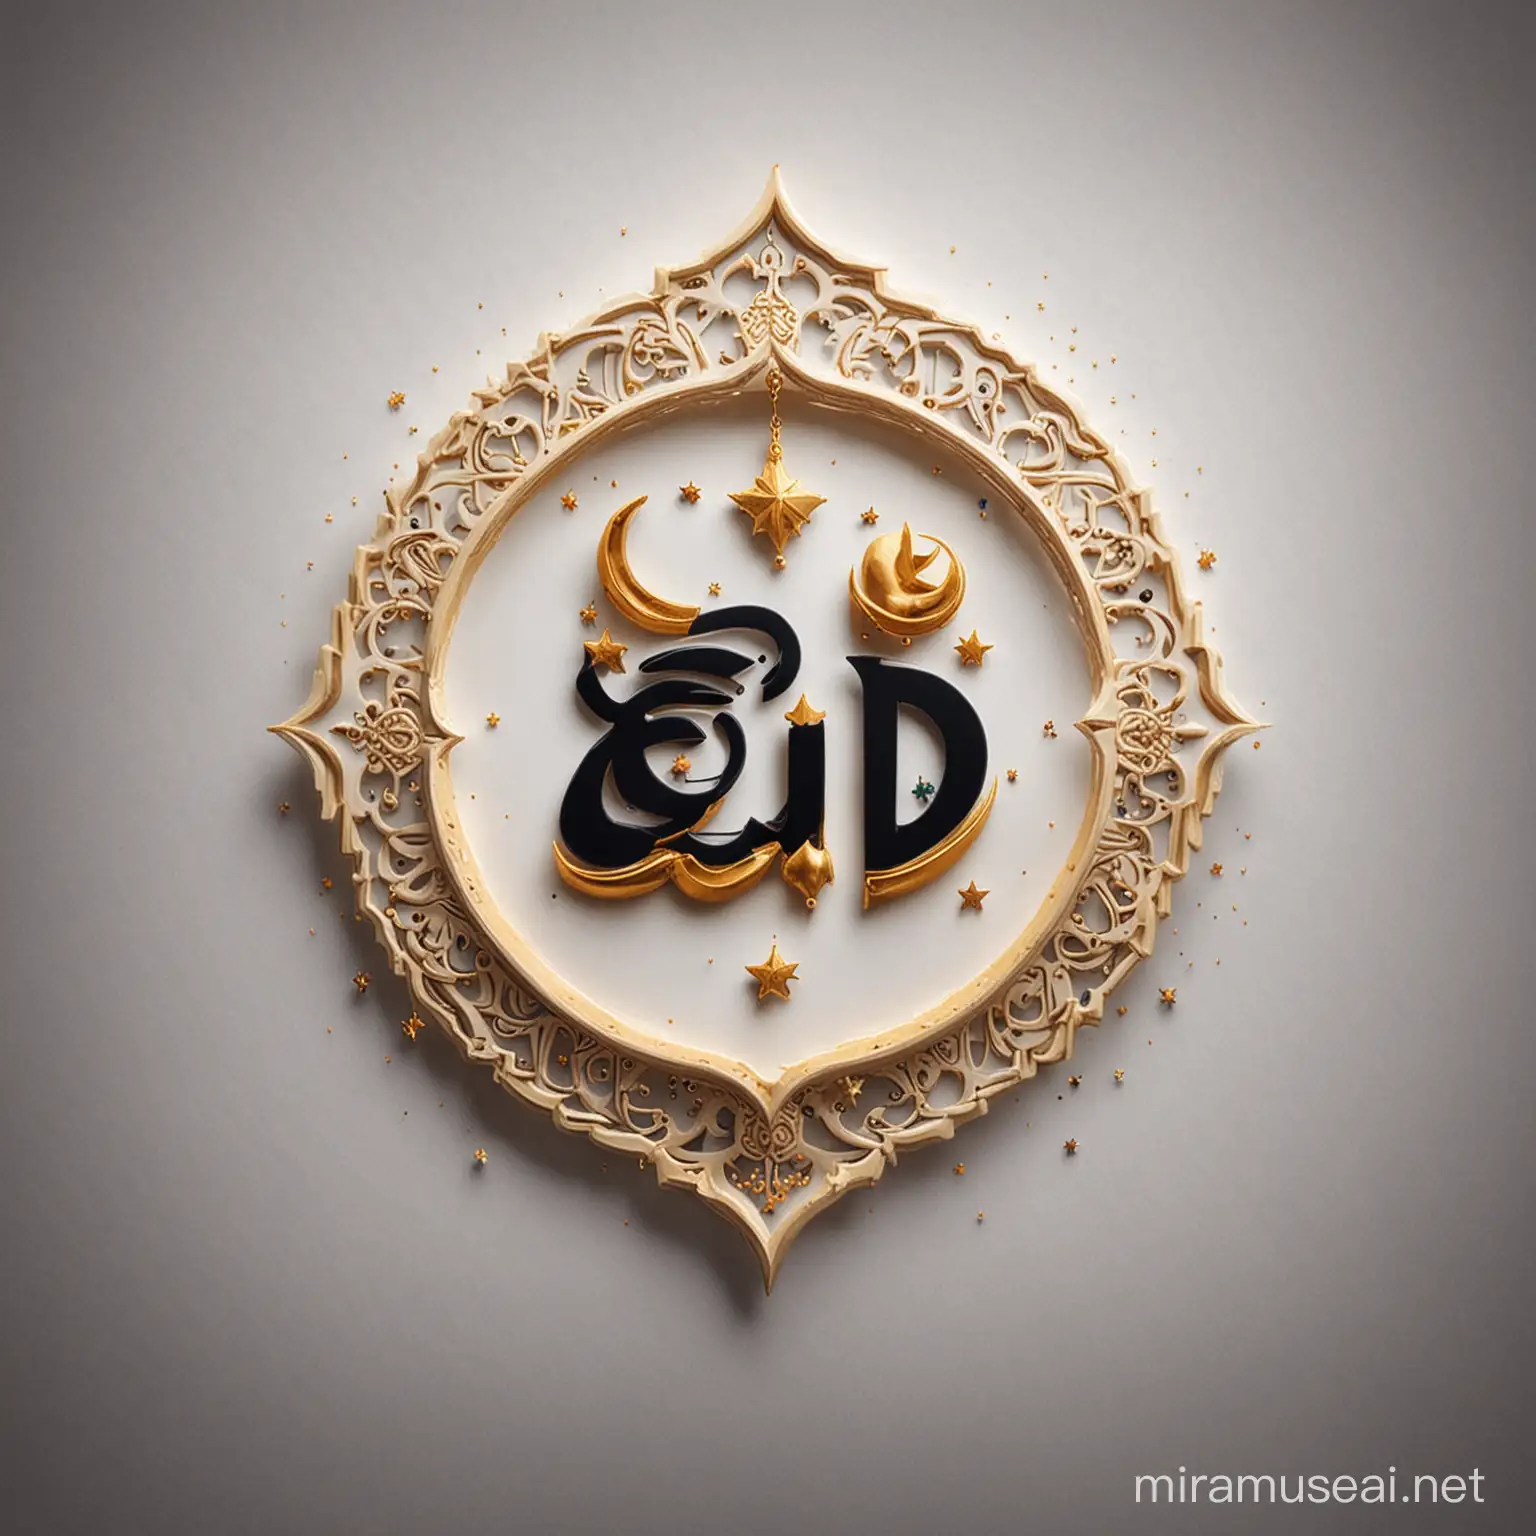 Celebrating Eid Mubarak with Traditional Feast and Festivities